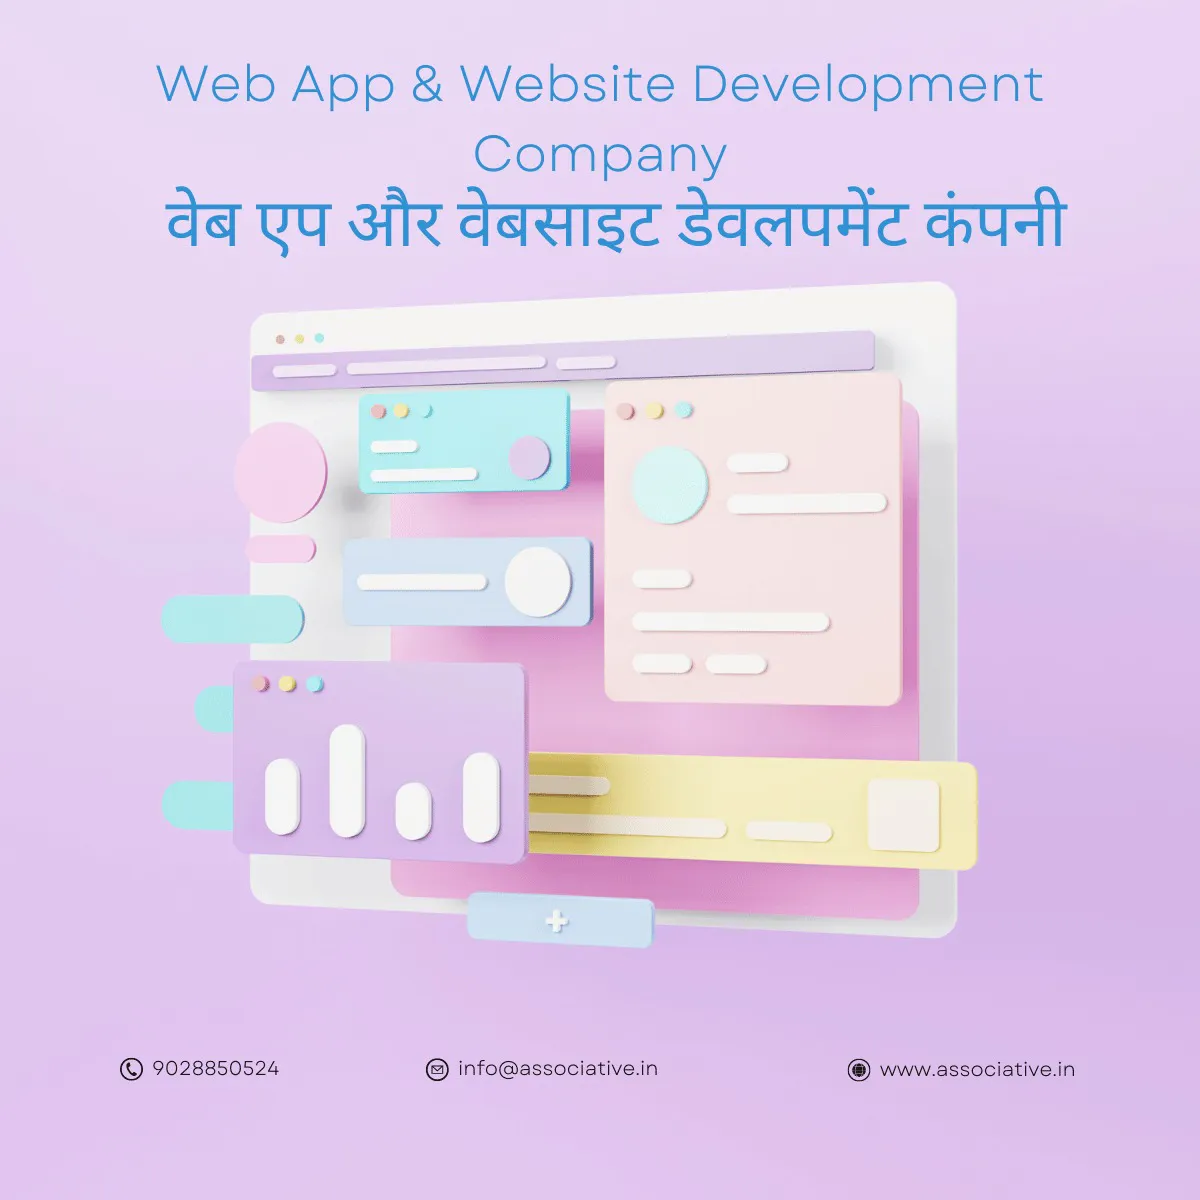 Web App & Website Development